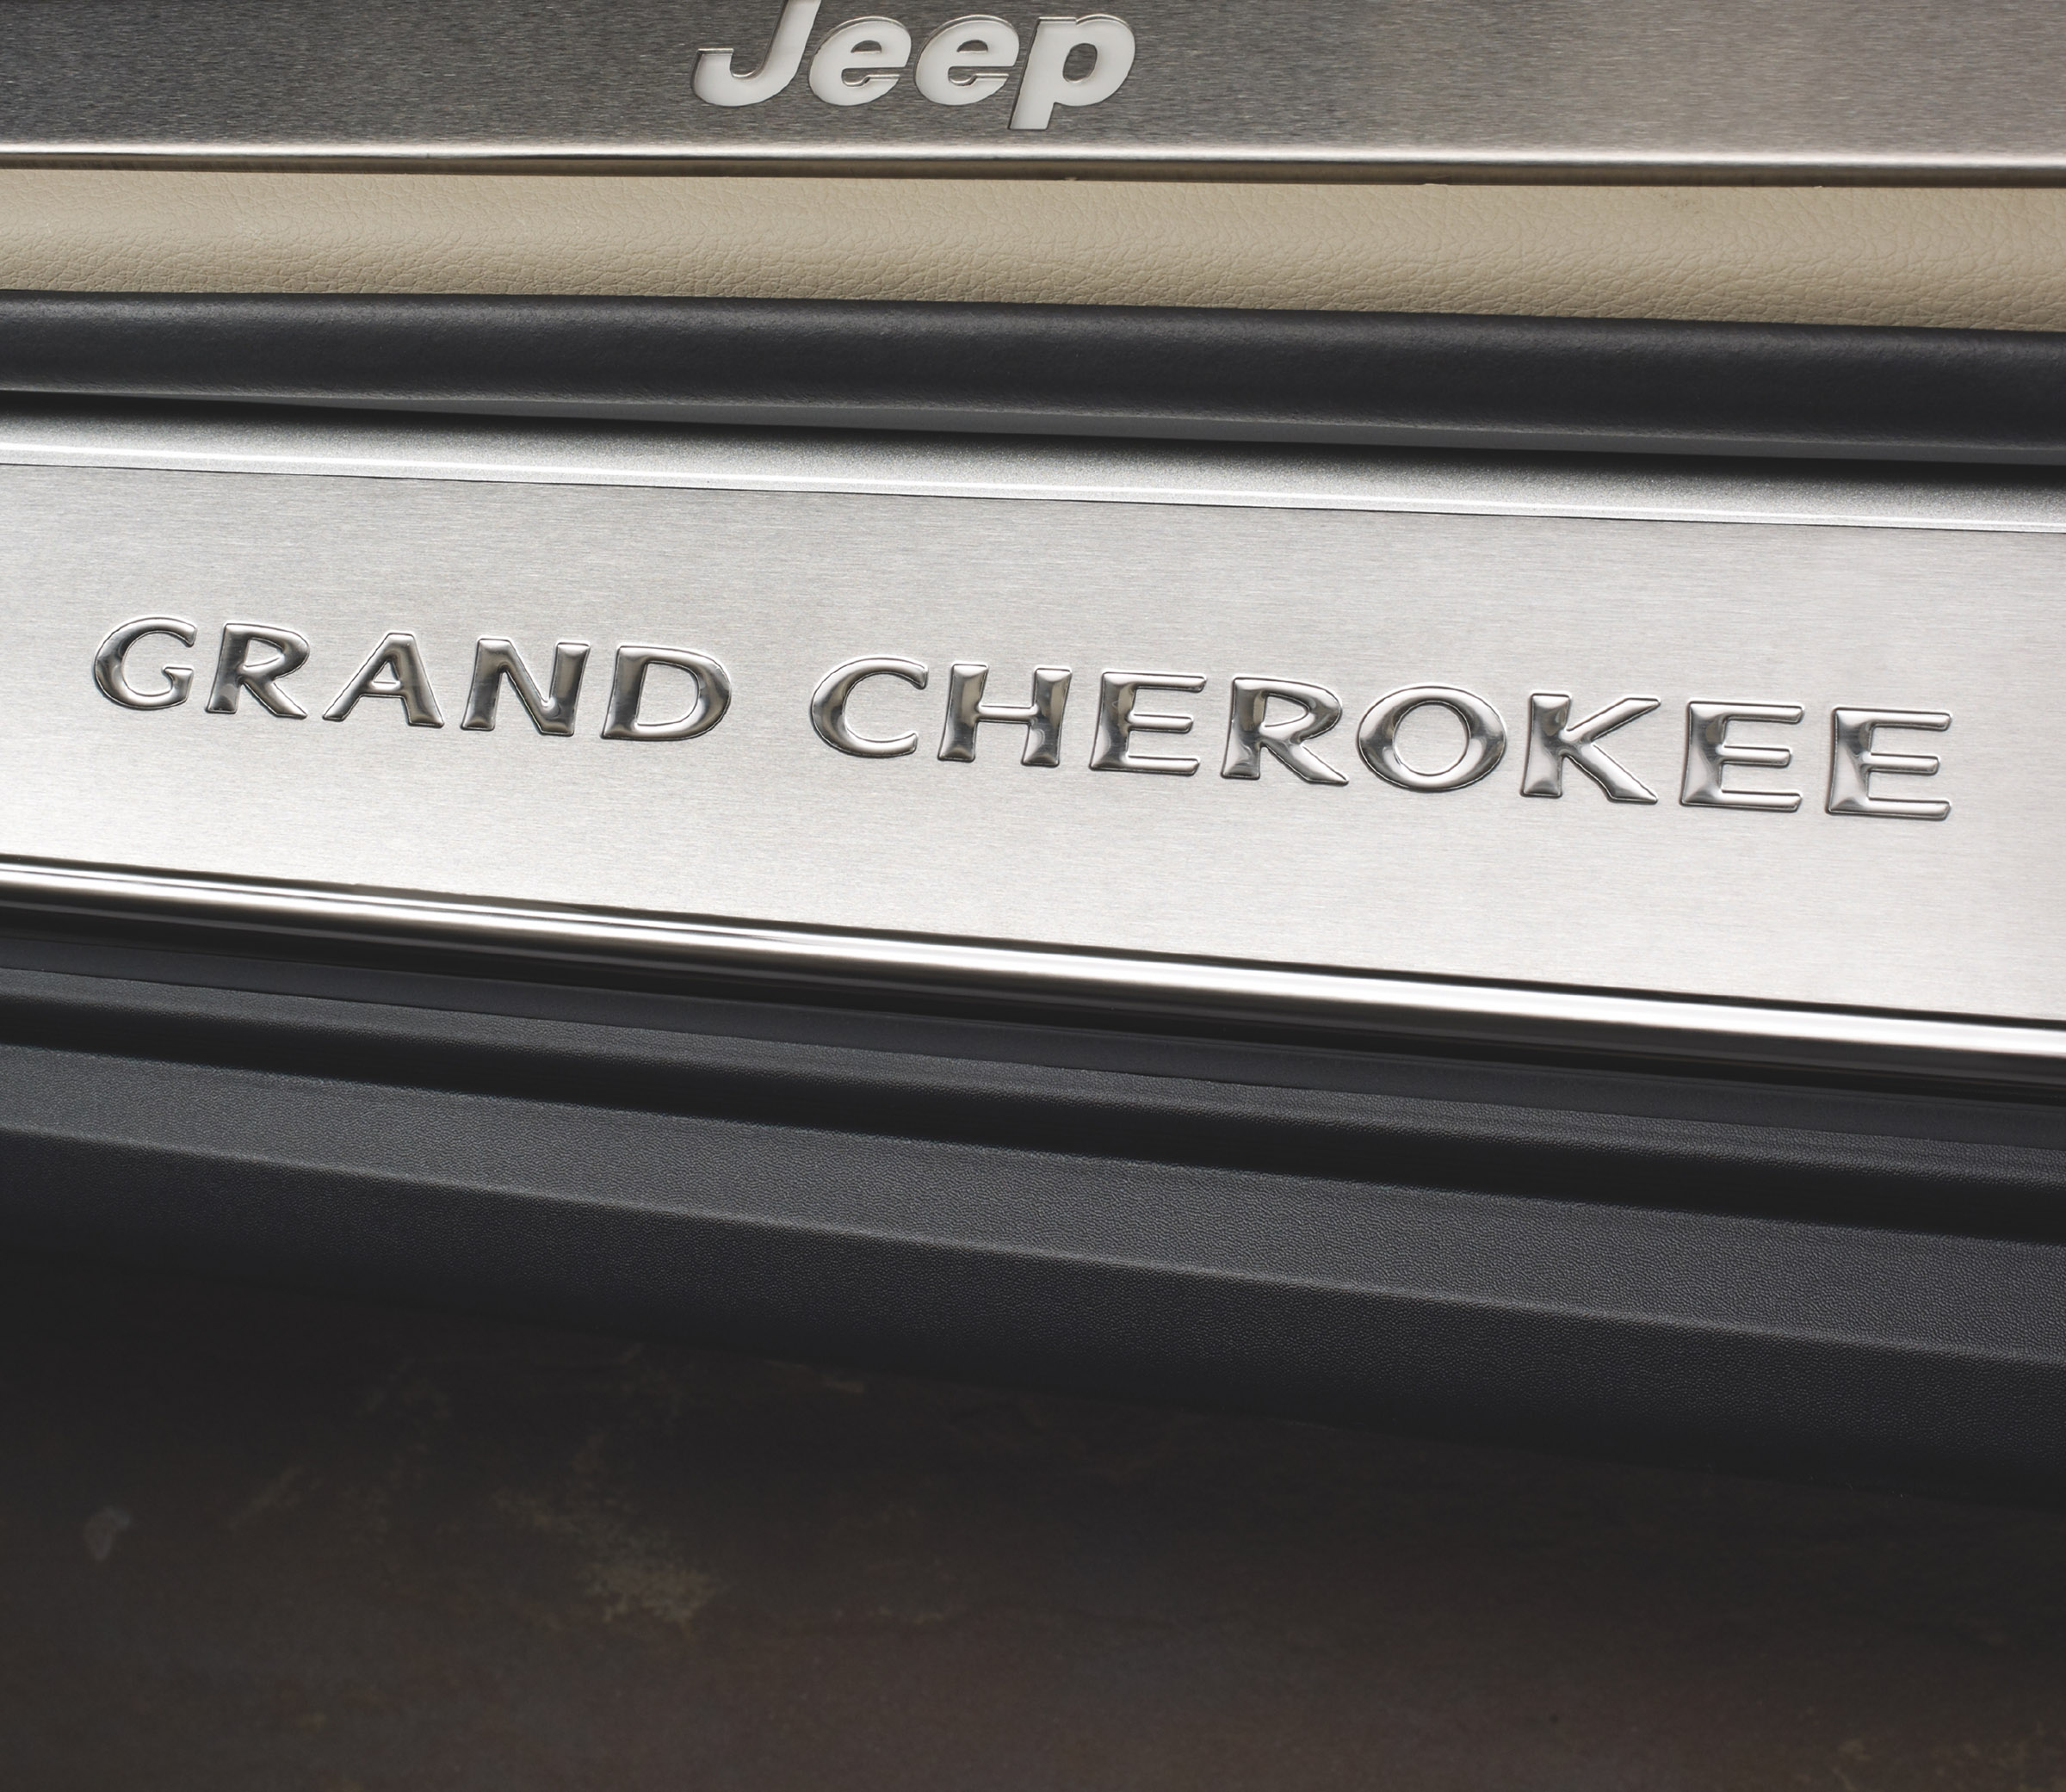 Jeep Grand Cherokee Moparized